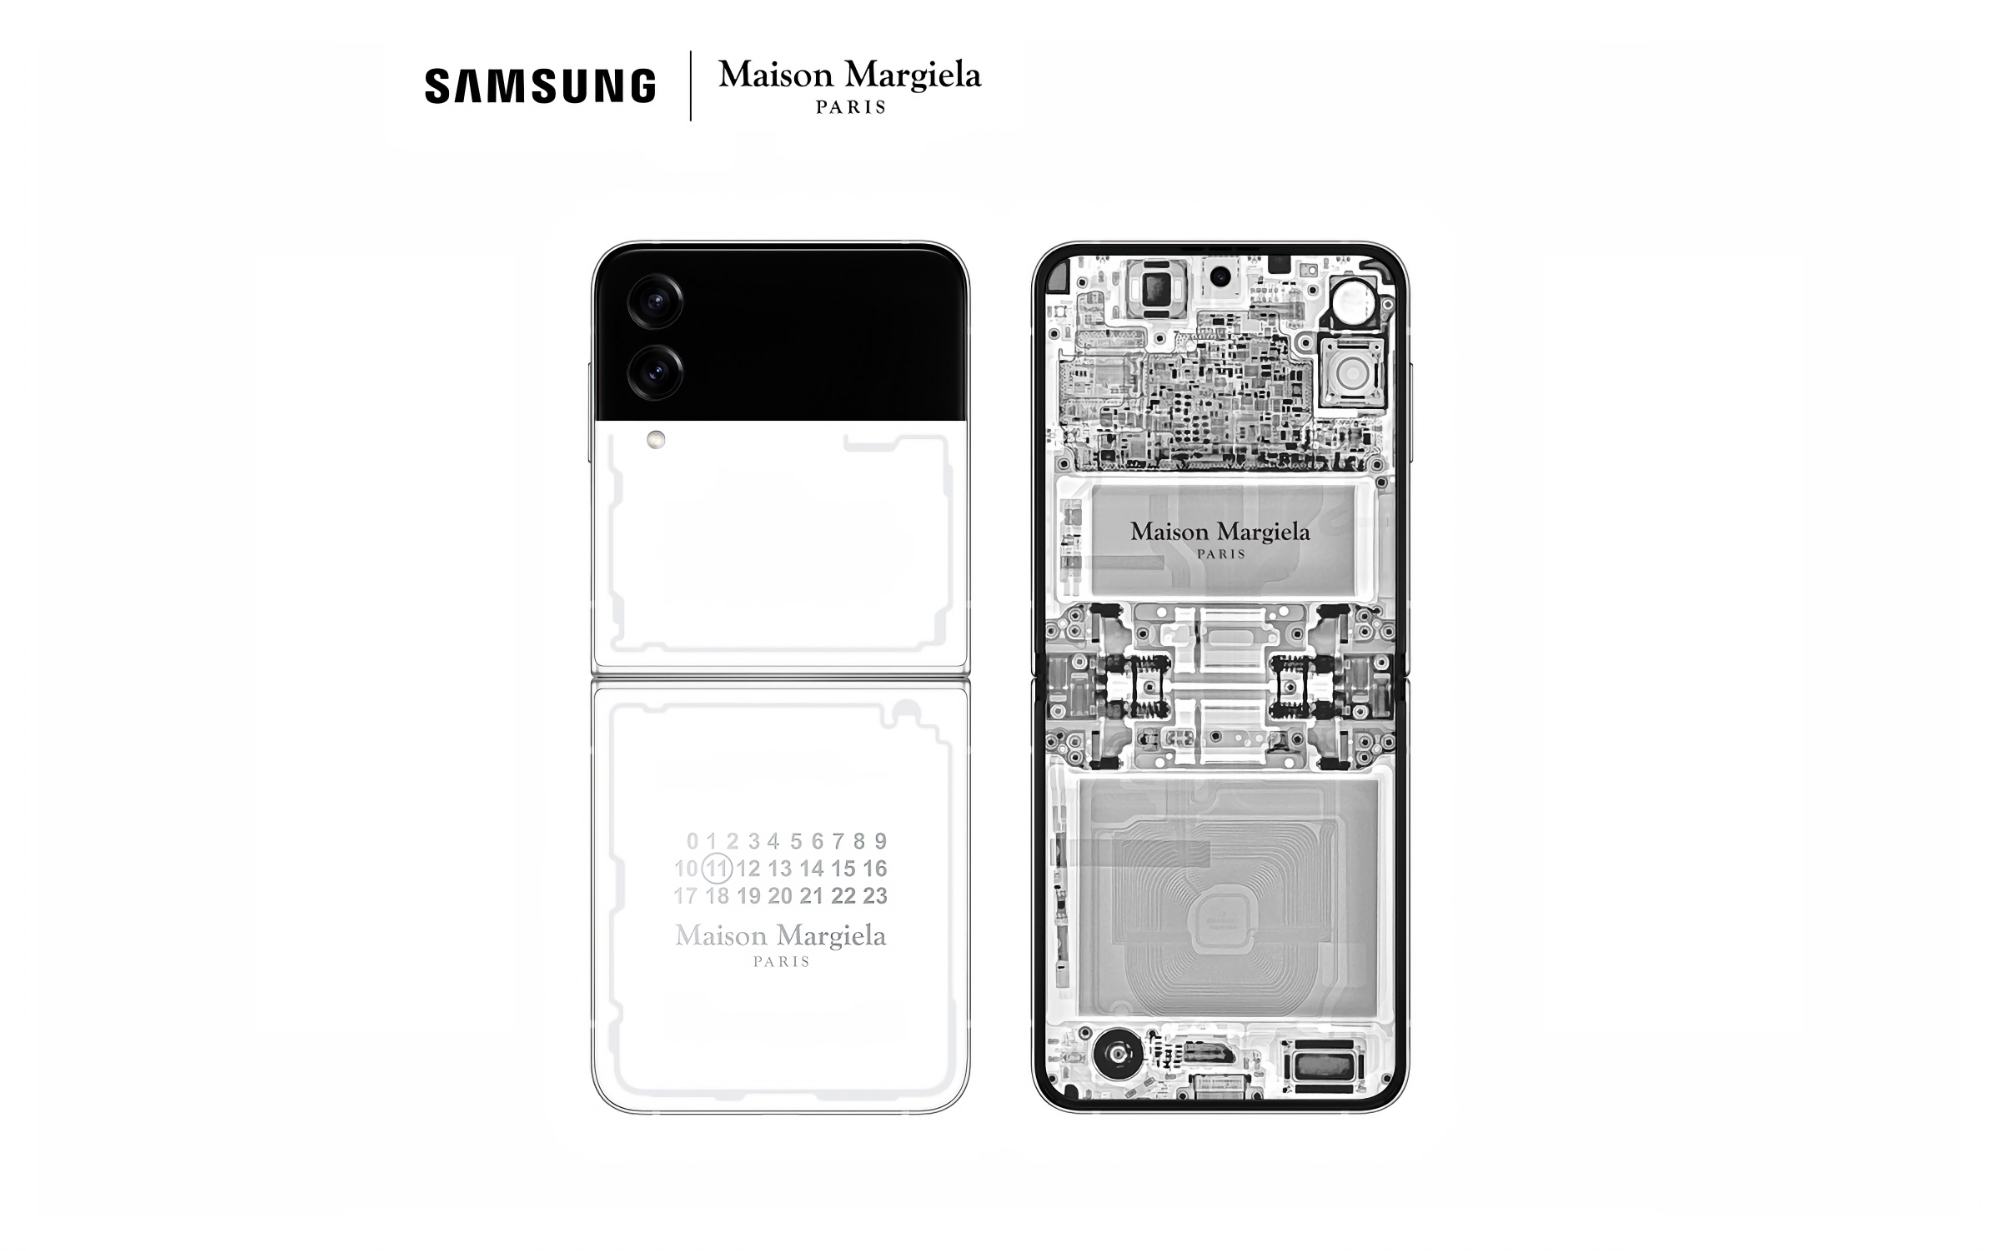 Samsung a dévoilé le prix du clamshell Galaxy Flip 4 Maison Margiela Edition.